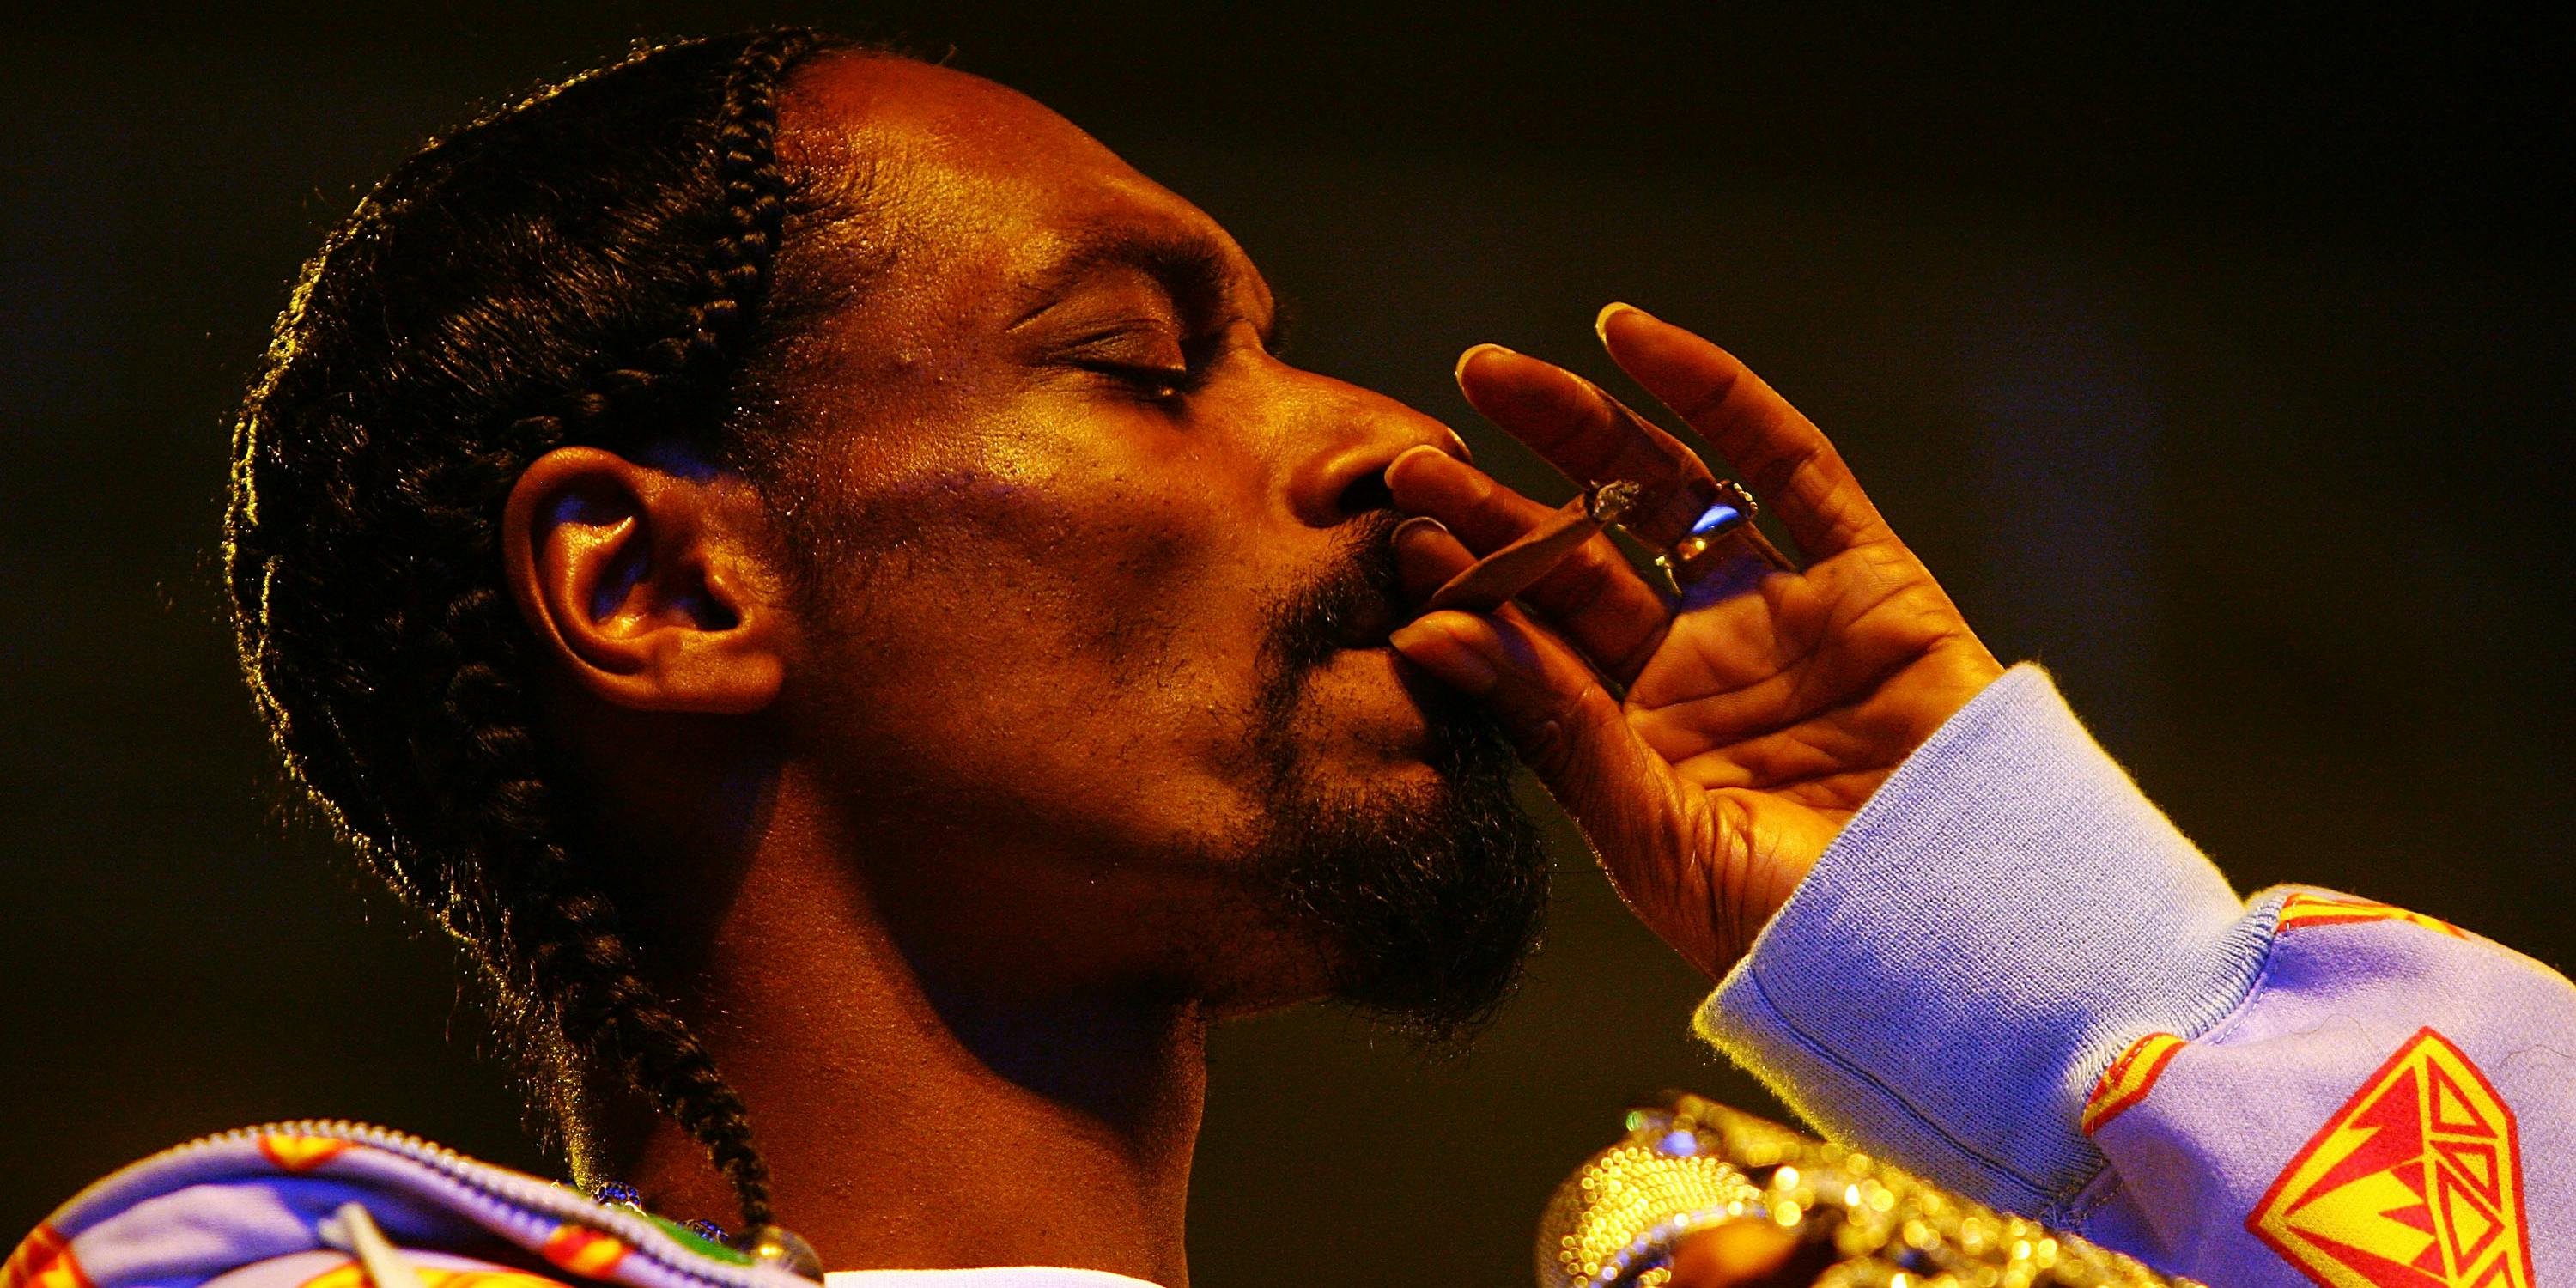 Snoop Dogg uses a Donald Trump ashtray